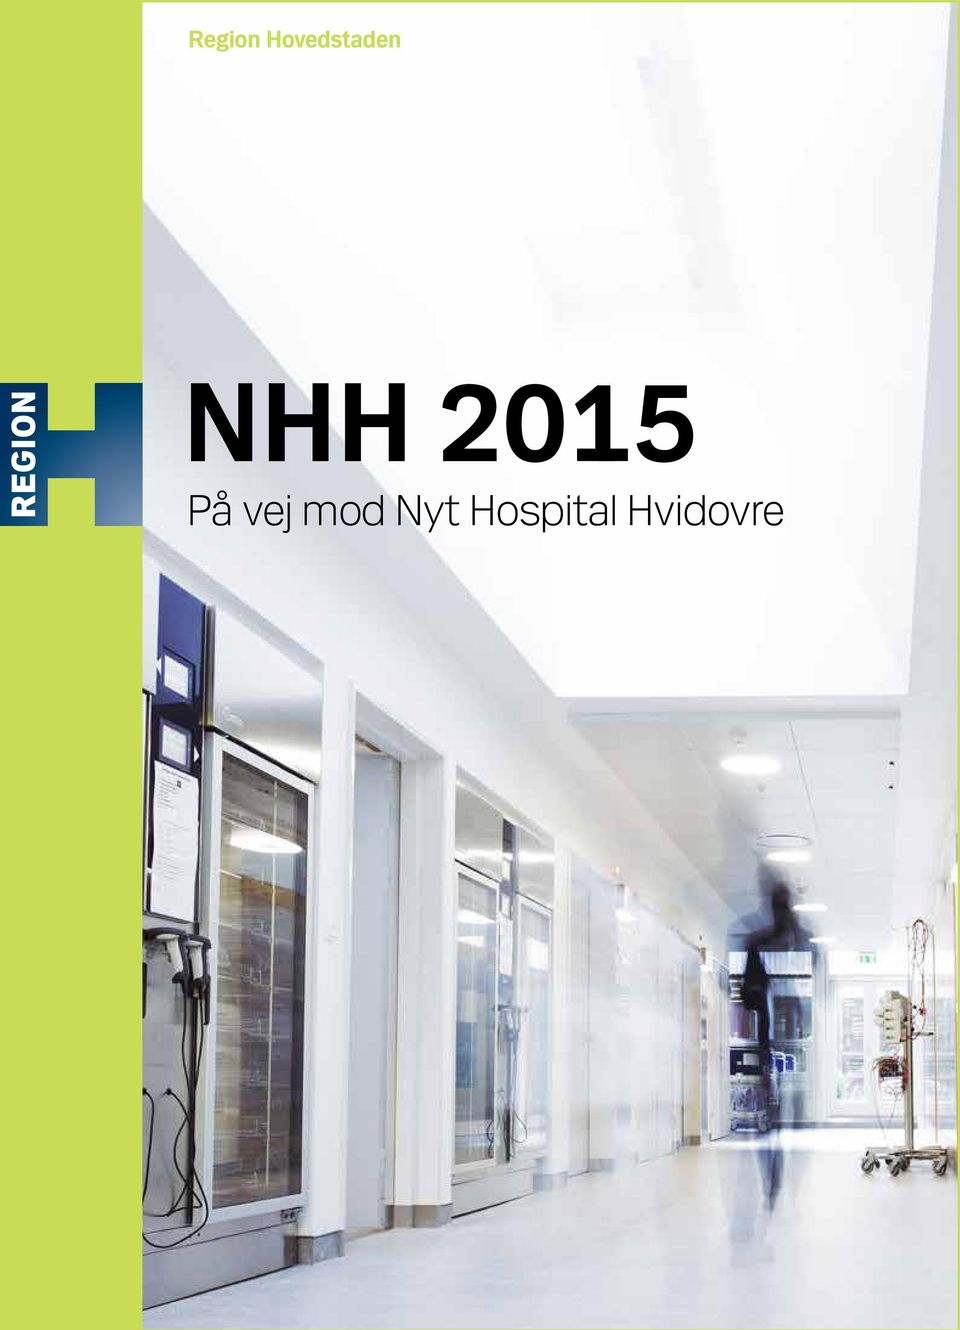 Hospital Hvidovre 1 NHH 